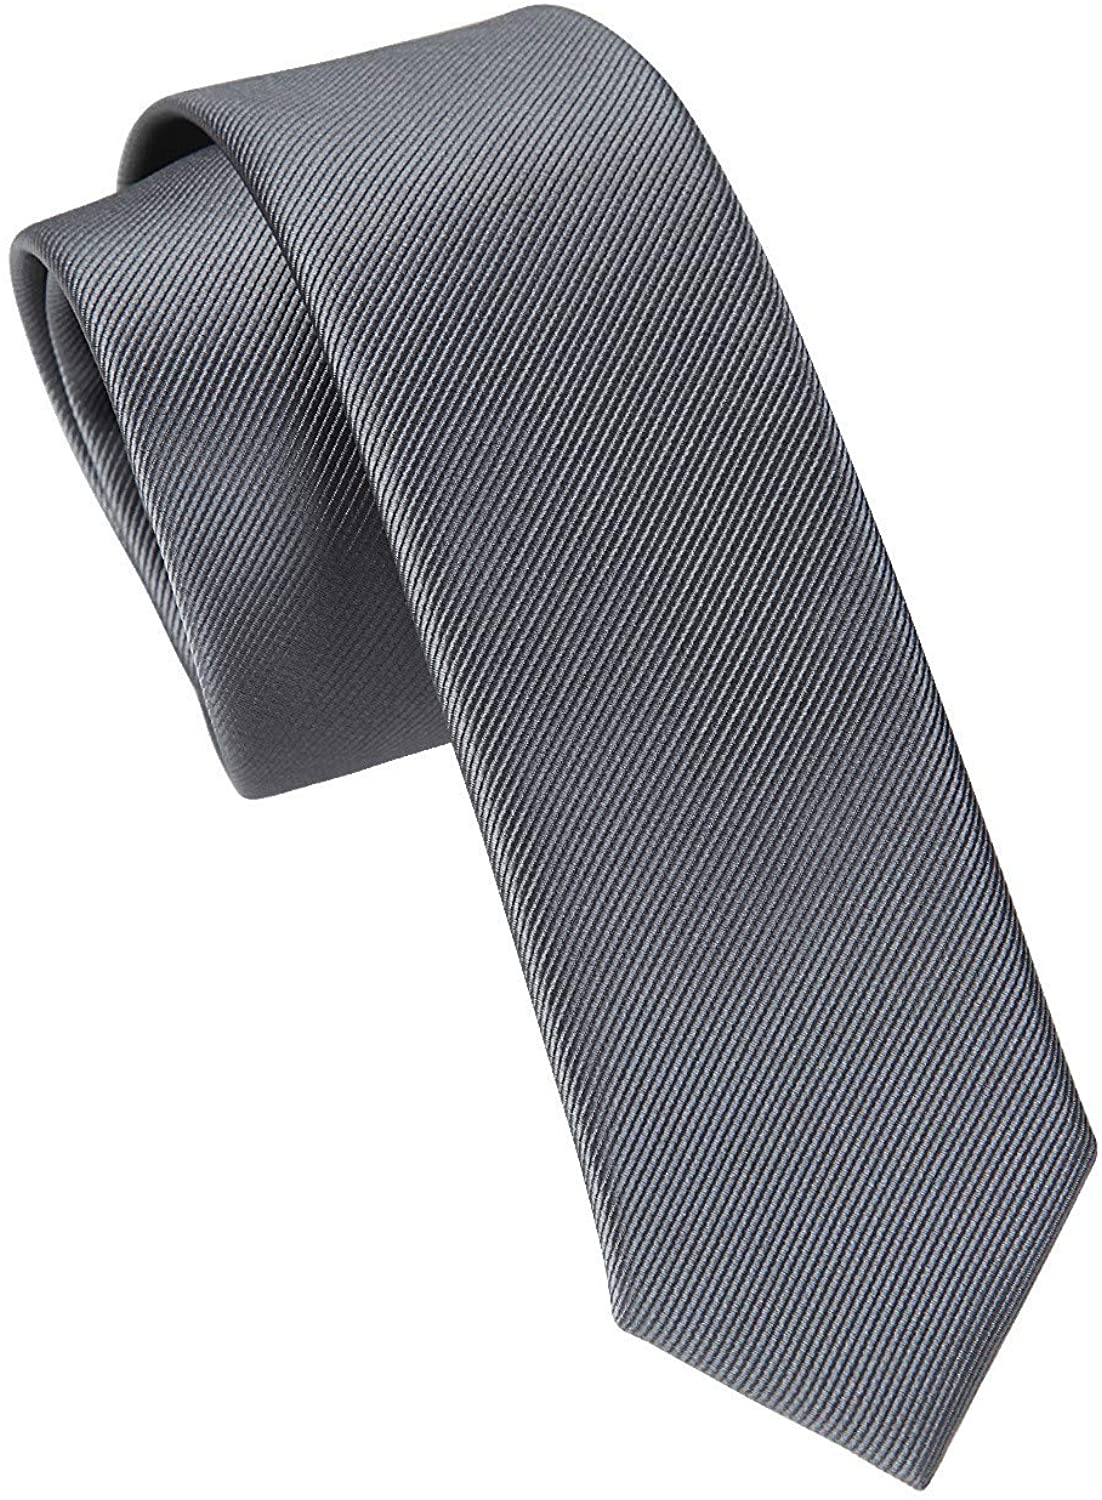 DQT Woven Plain Solid Check Silver Formal Slim Clip On Tie & Hanky Set 